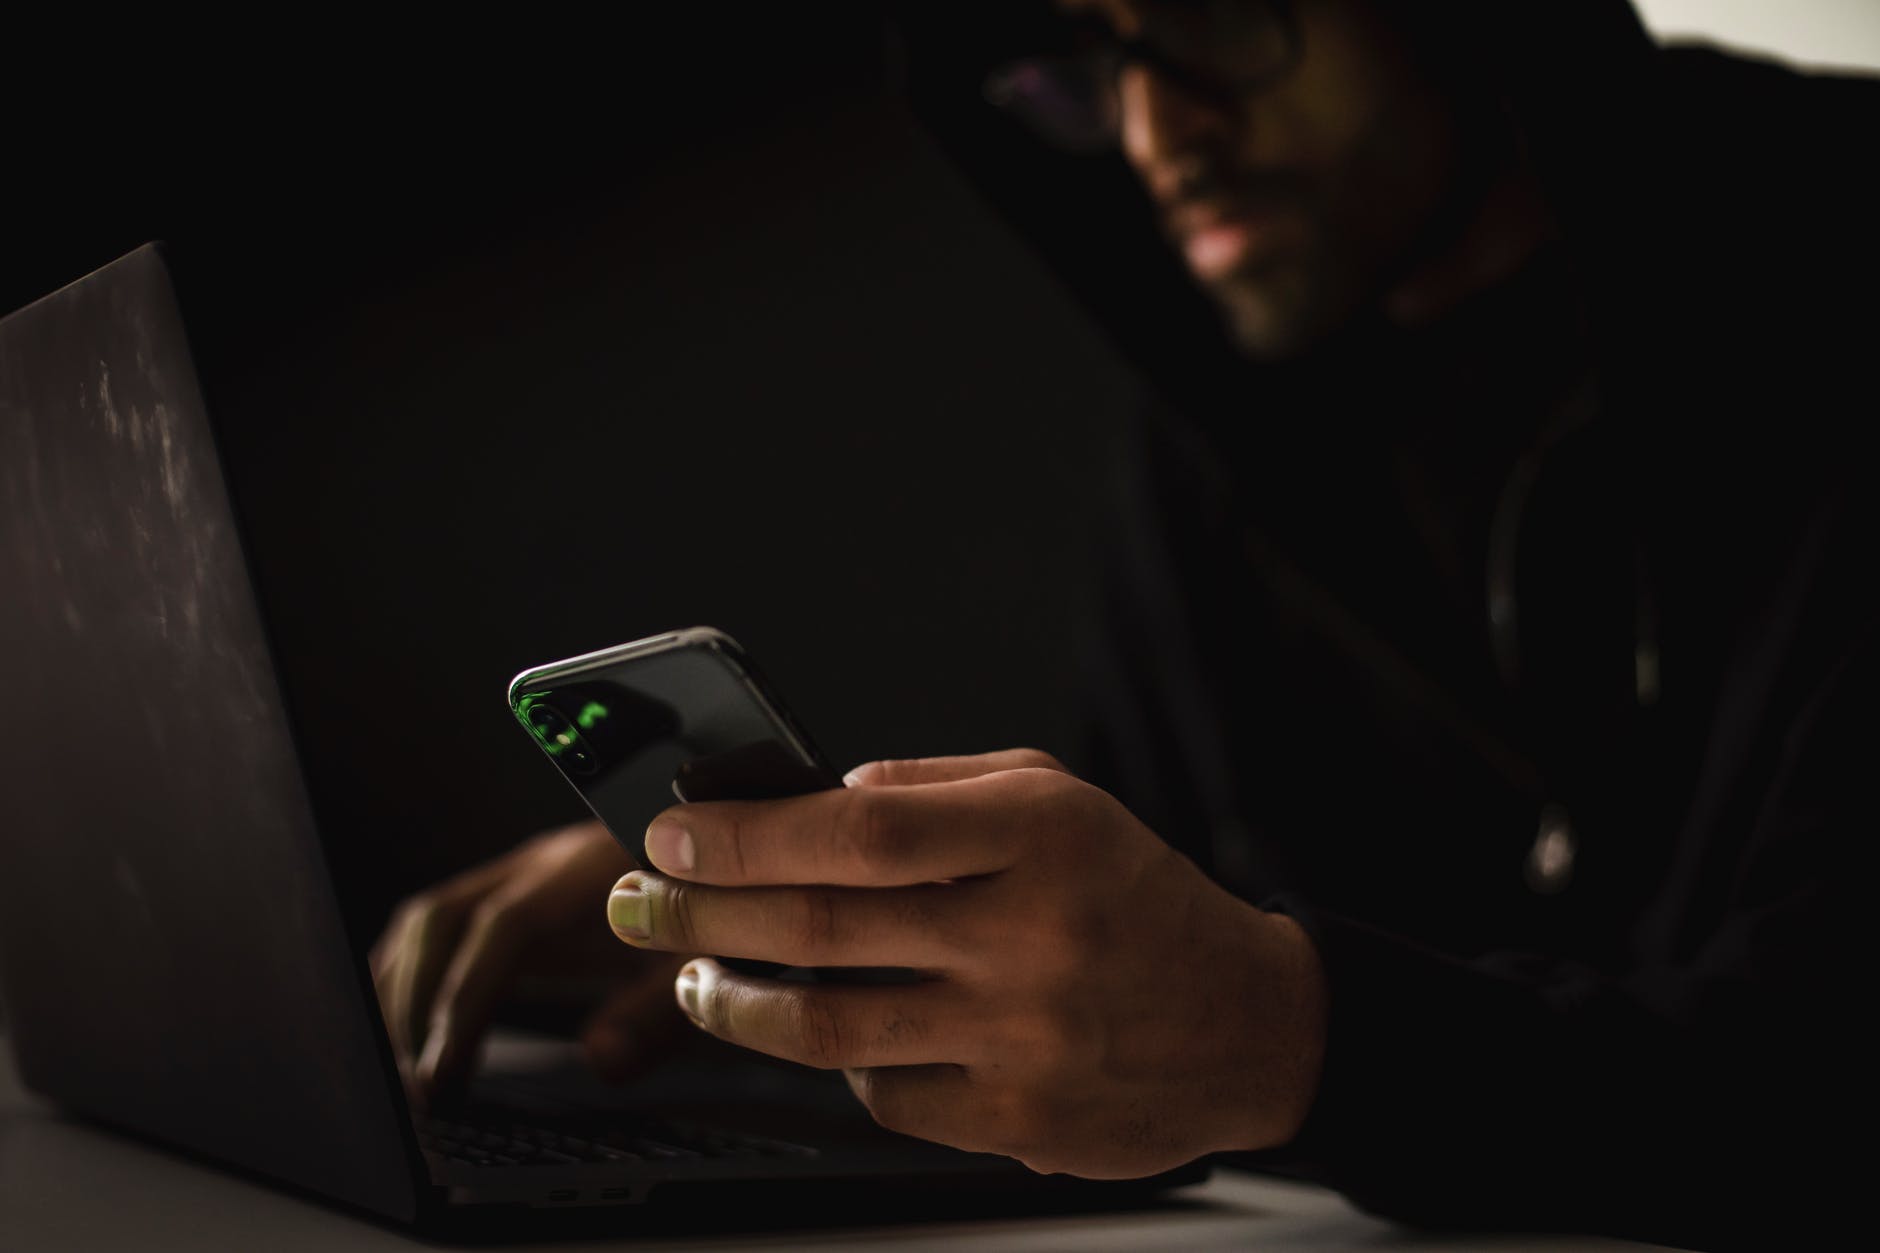 crop ethnic hacker with smartphone typing on laptop in dark room